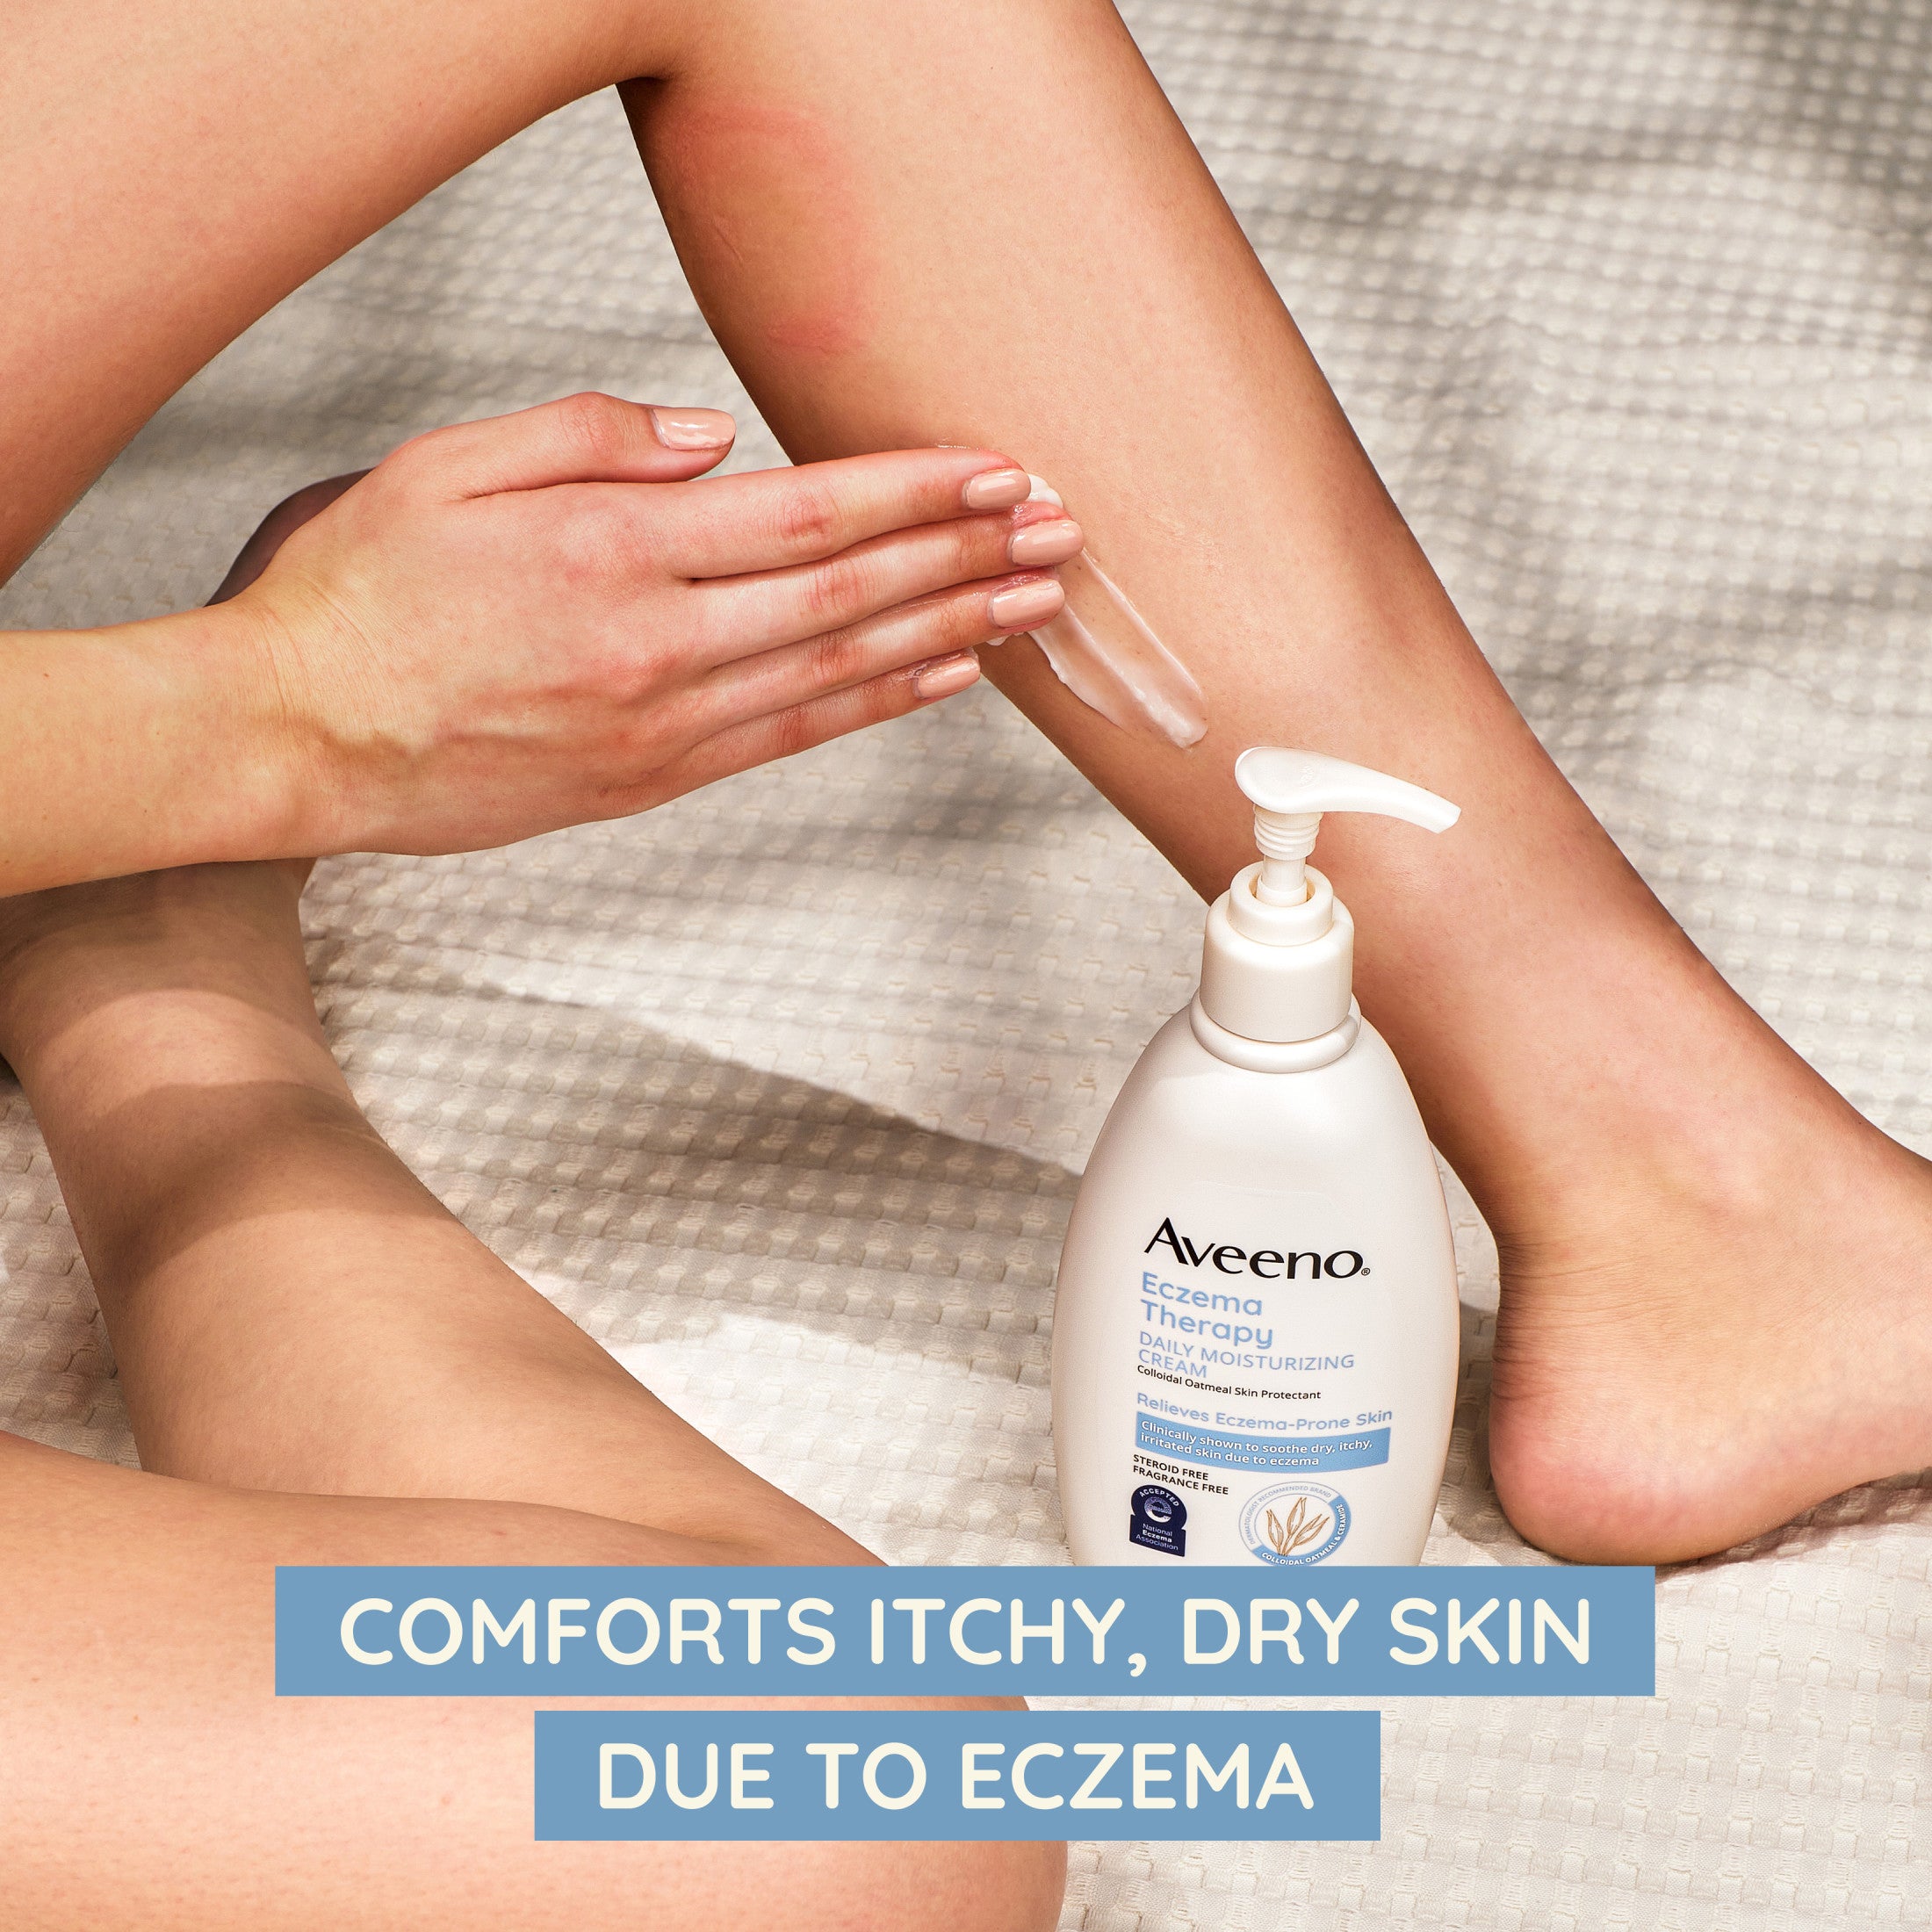 Aveeno Eczema Therapy Daily Moisturizing Body Lotion, Fragrance Free Cream, 7.3 oz | MTTS345